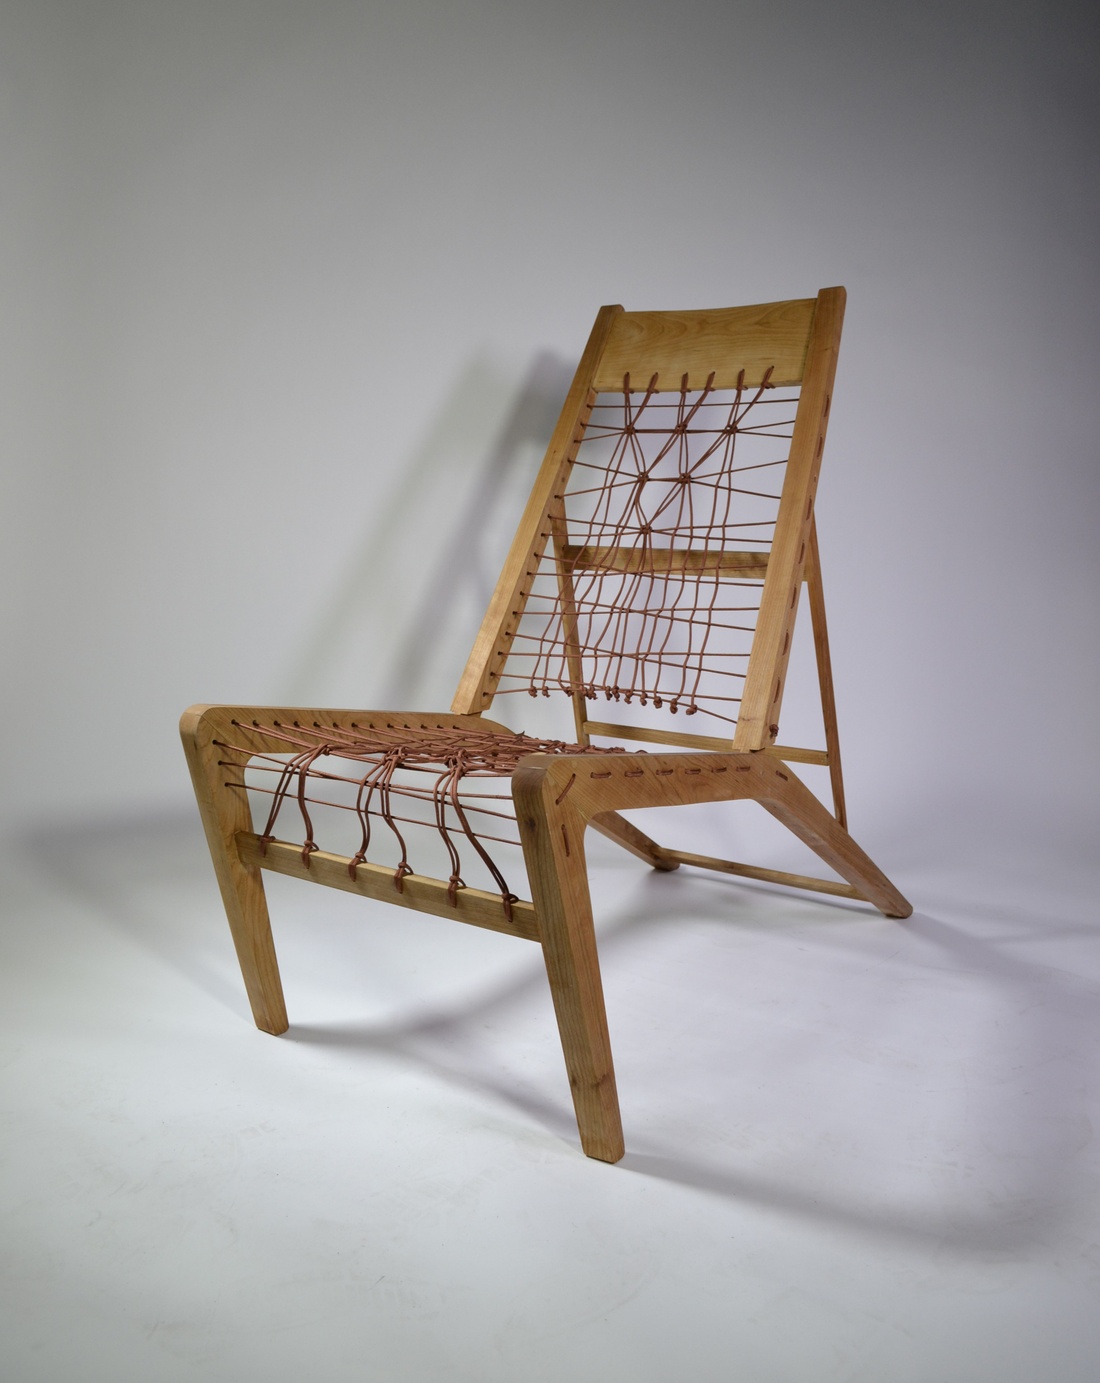 Chair by Jennifer Fontenot